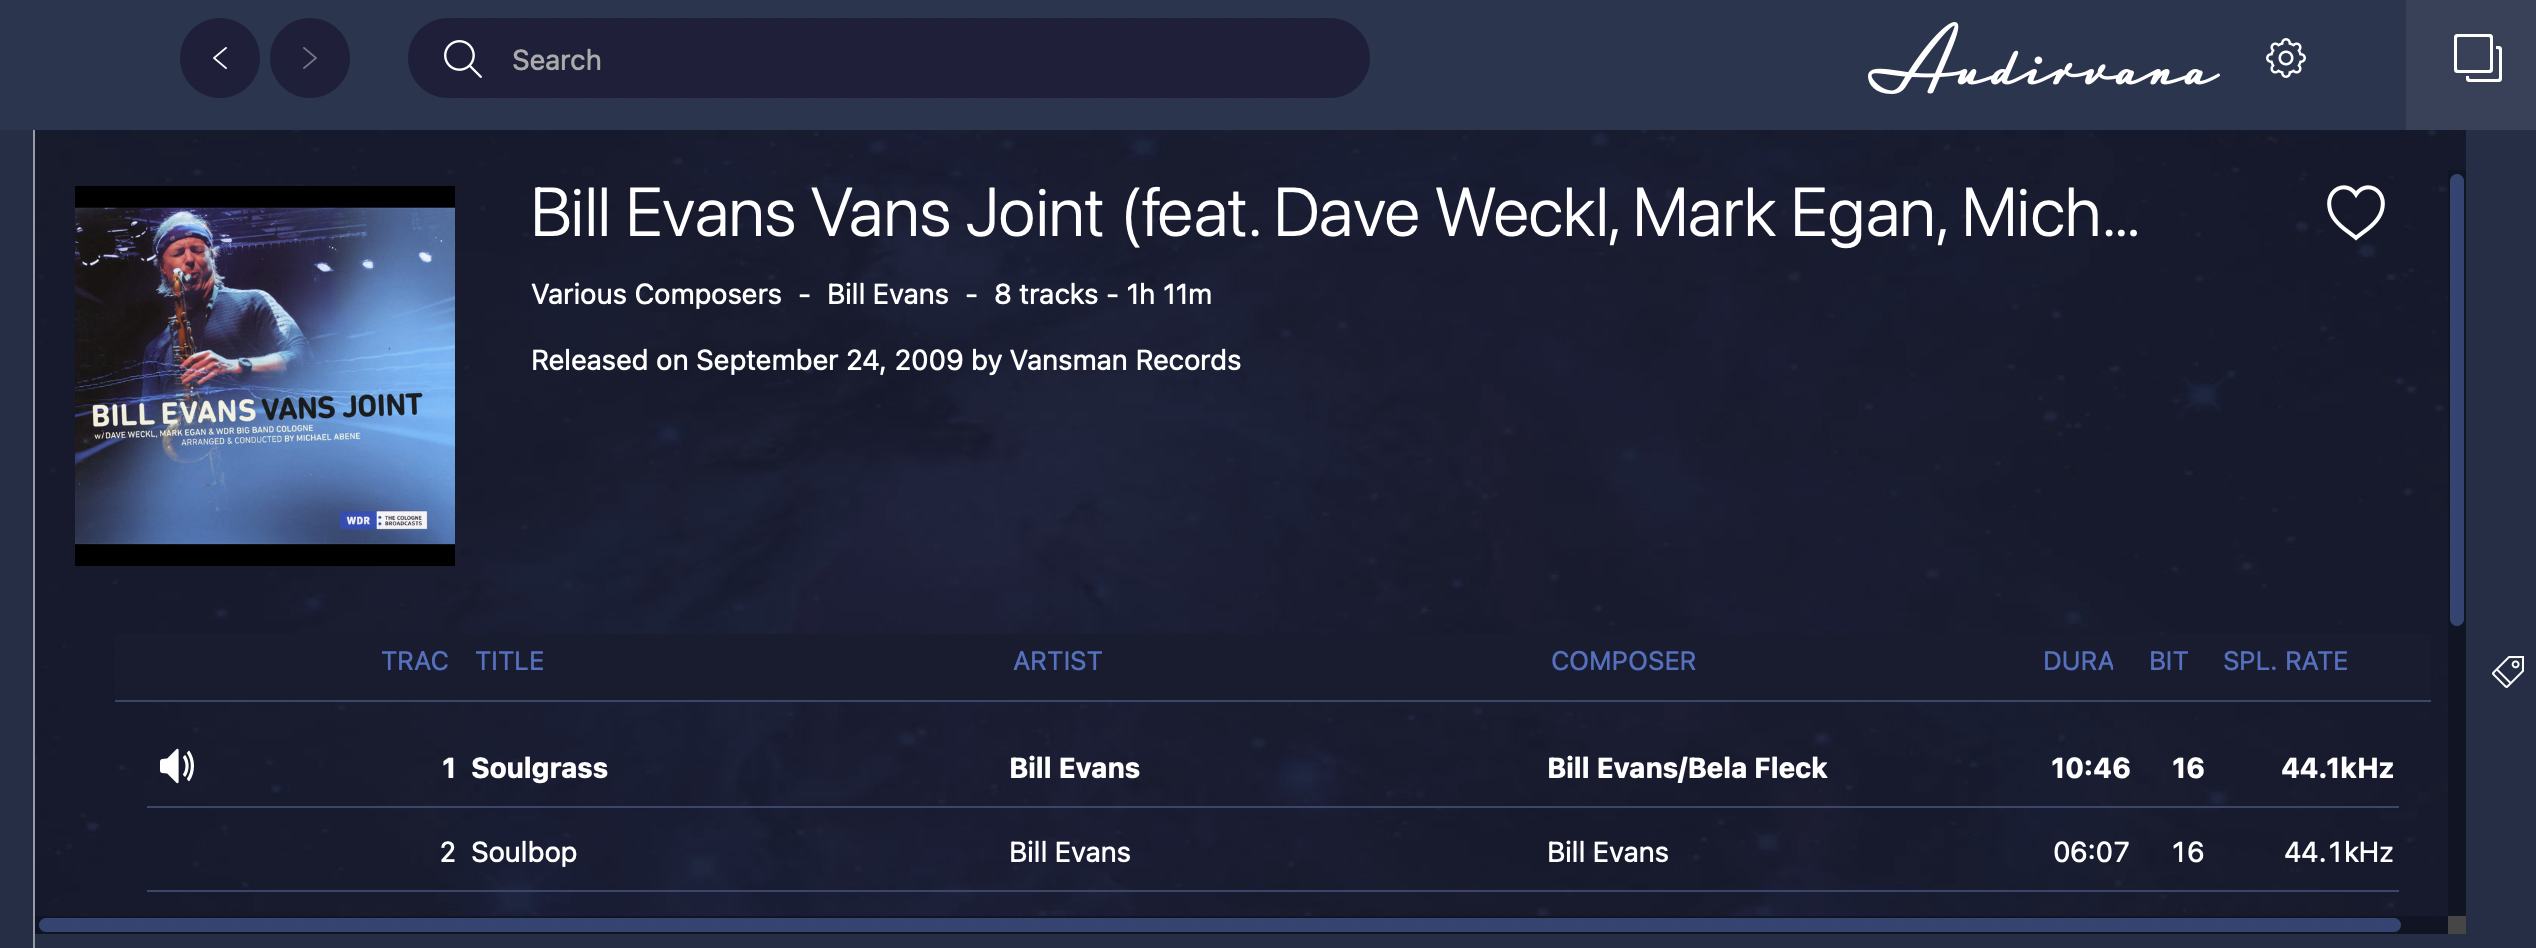 Bill Evans Vans Joint.png